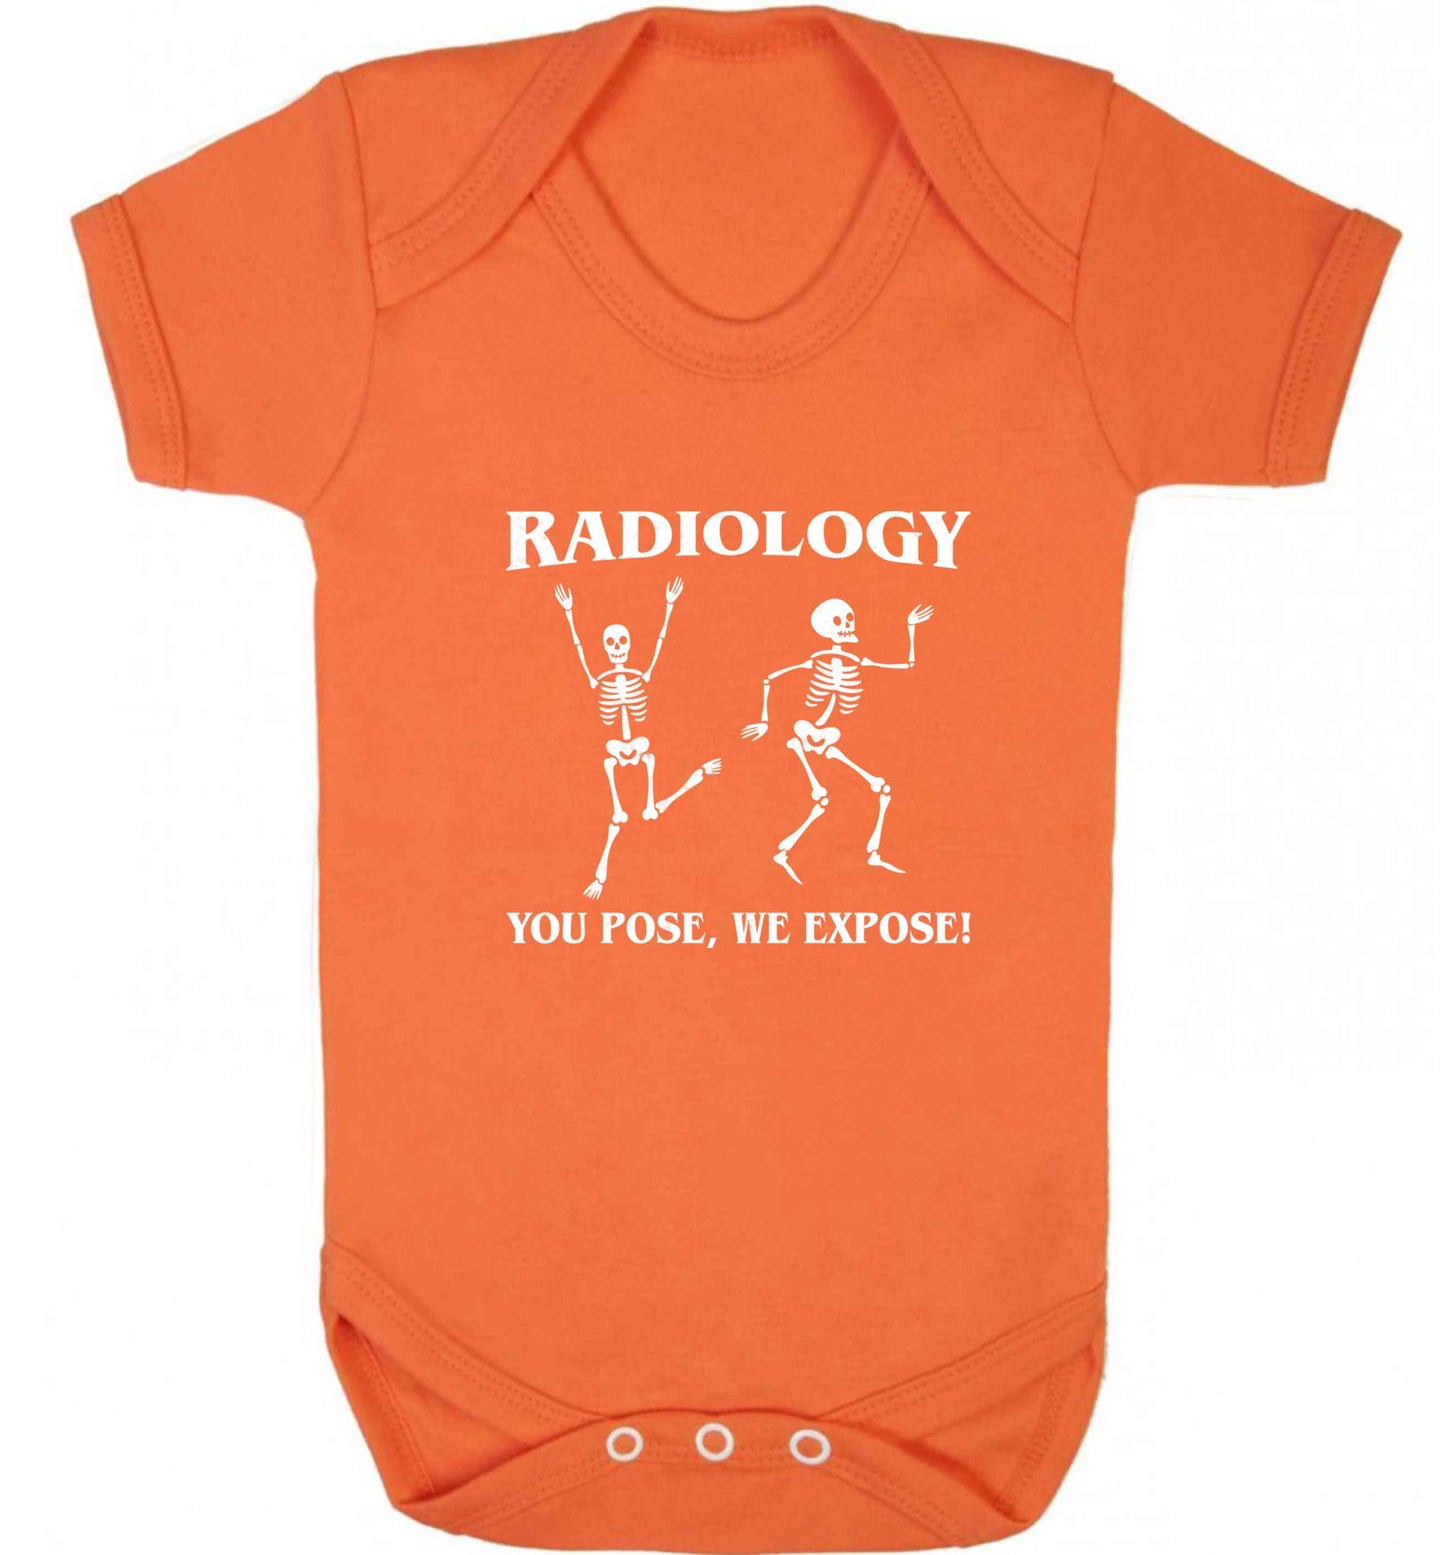 Radiology you pose we expose baby vest orange 18-24 months